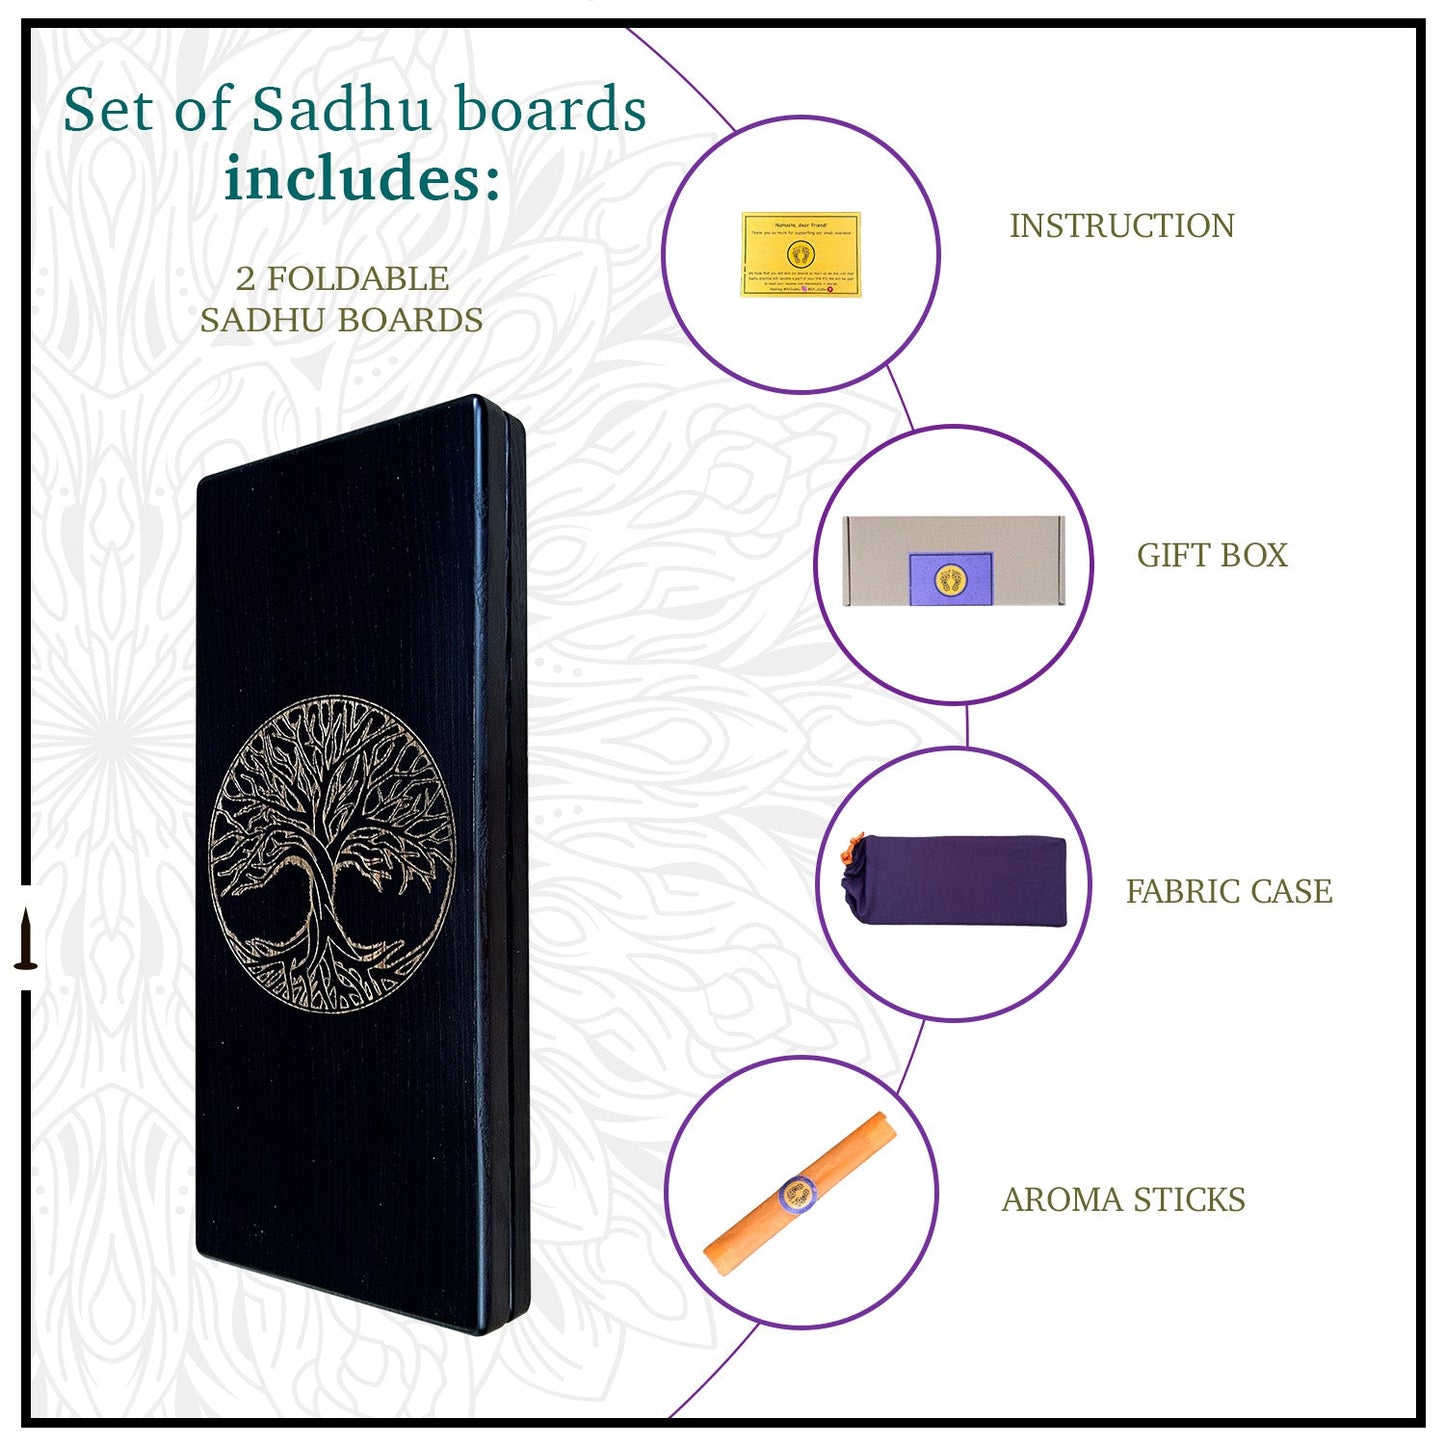 Set of sadhu boards included box, case, aroma sticks